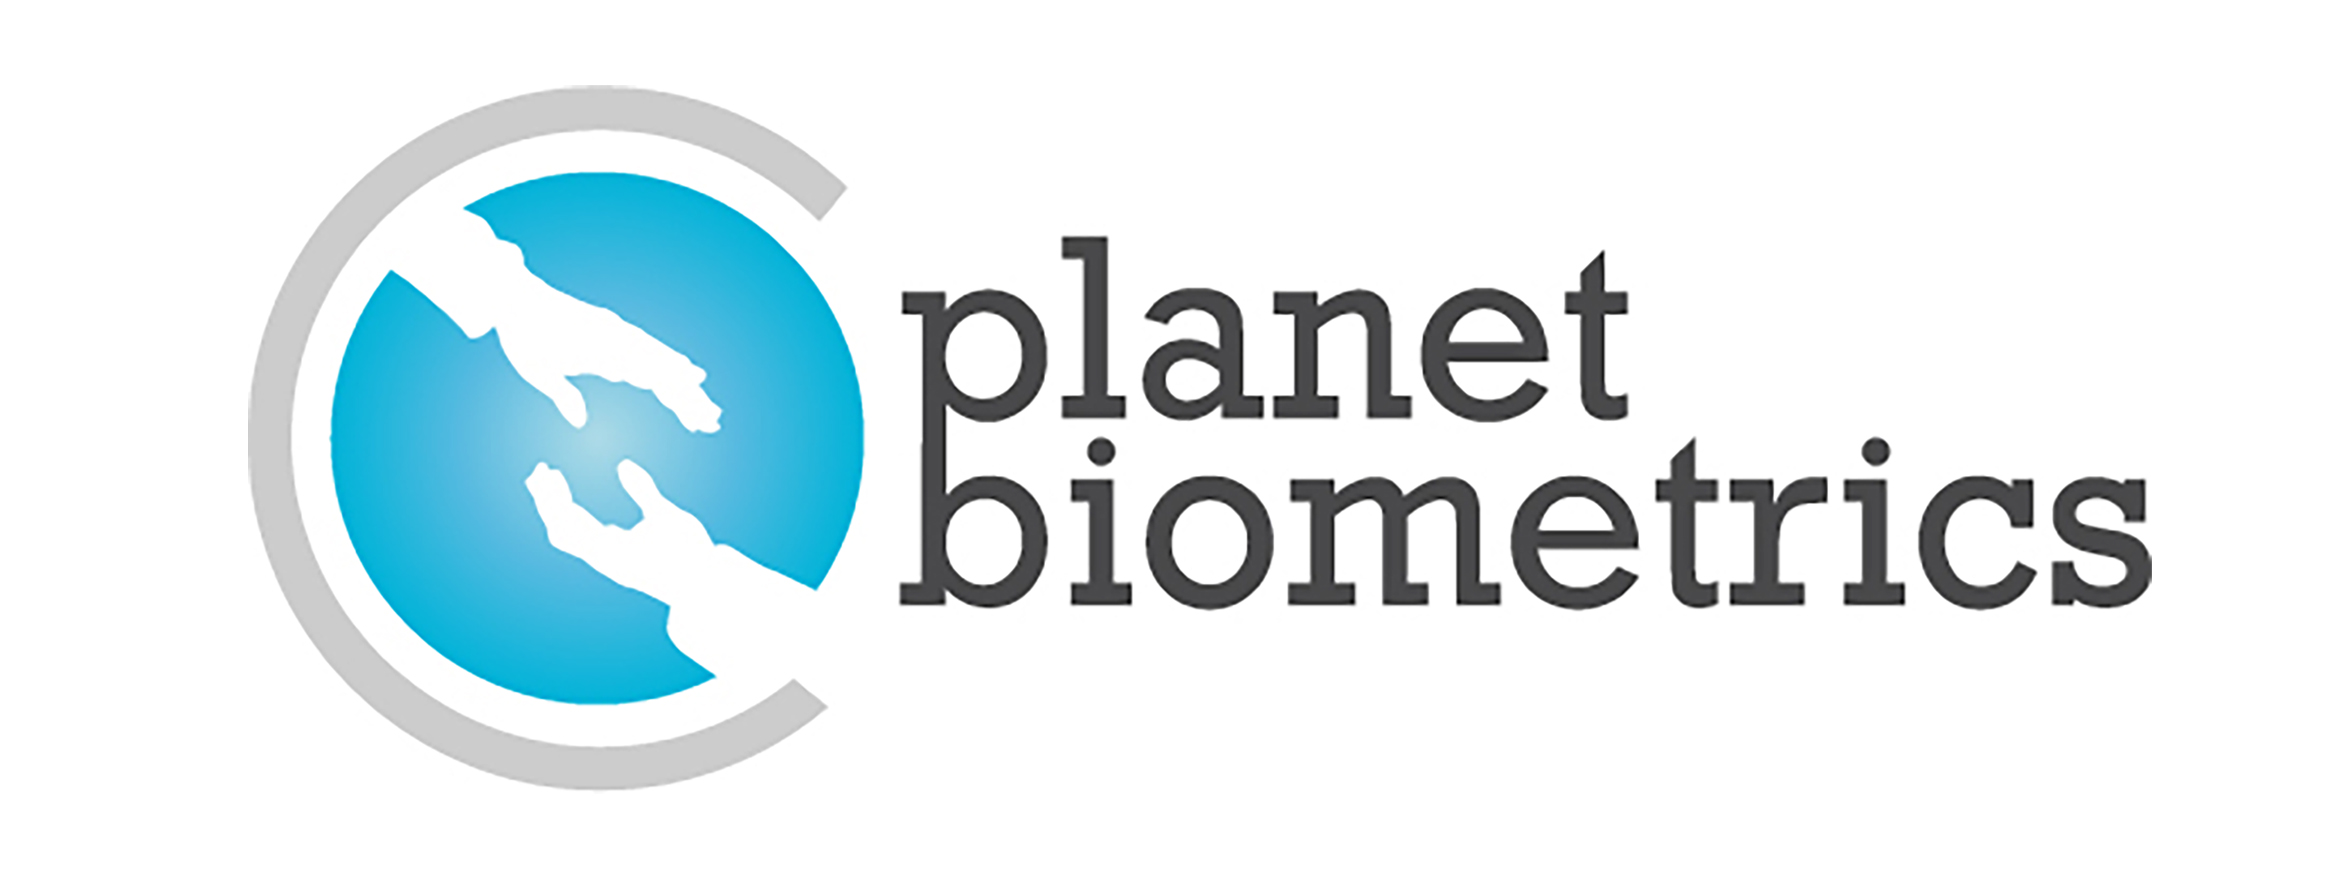 planet biometrics logo